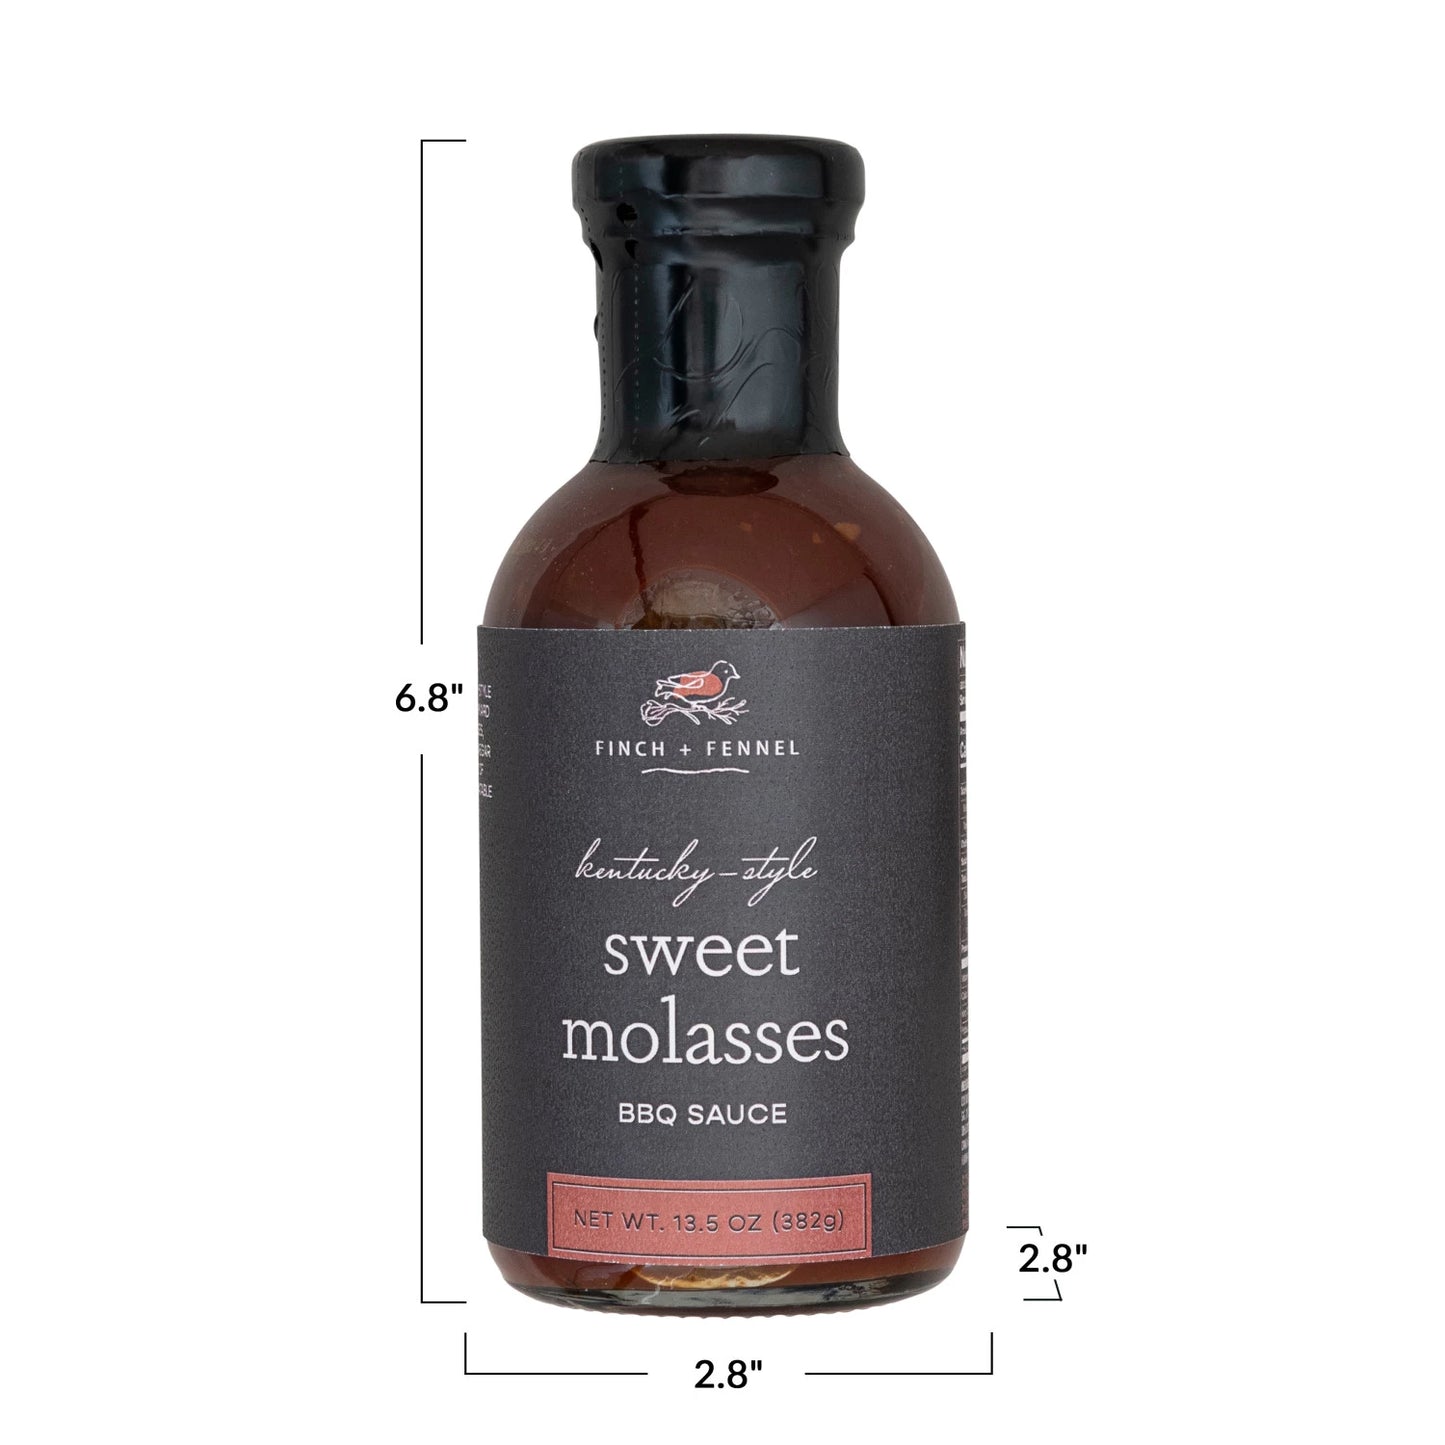 Finch + Fennel Kentucky-Style Sweet Molasses BBQ Sauce